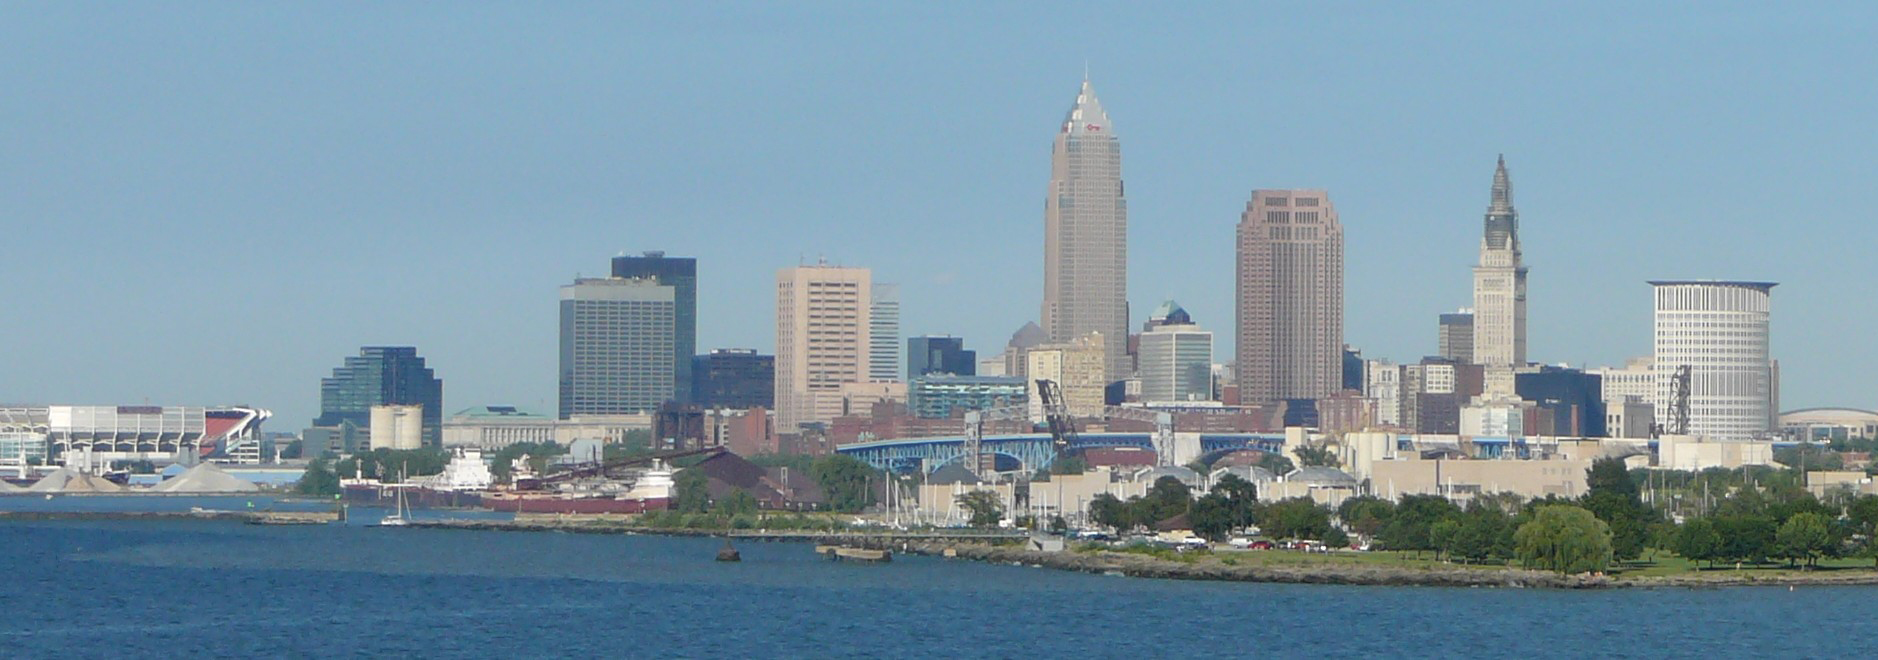 Cleveland Skyline from Lake